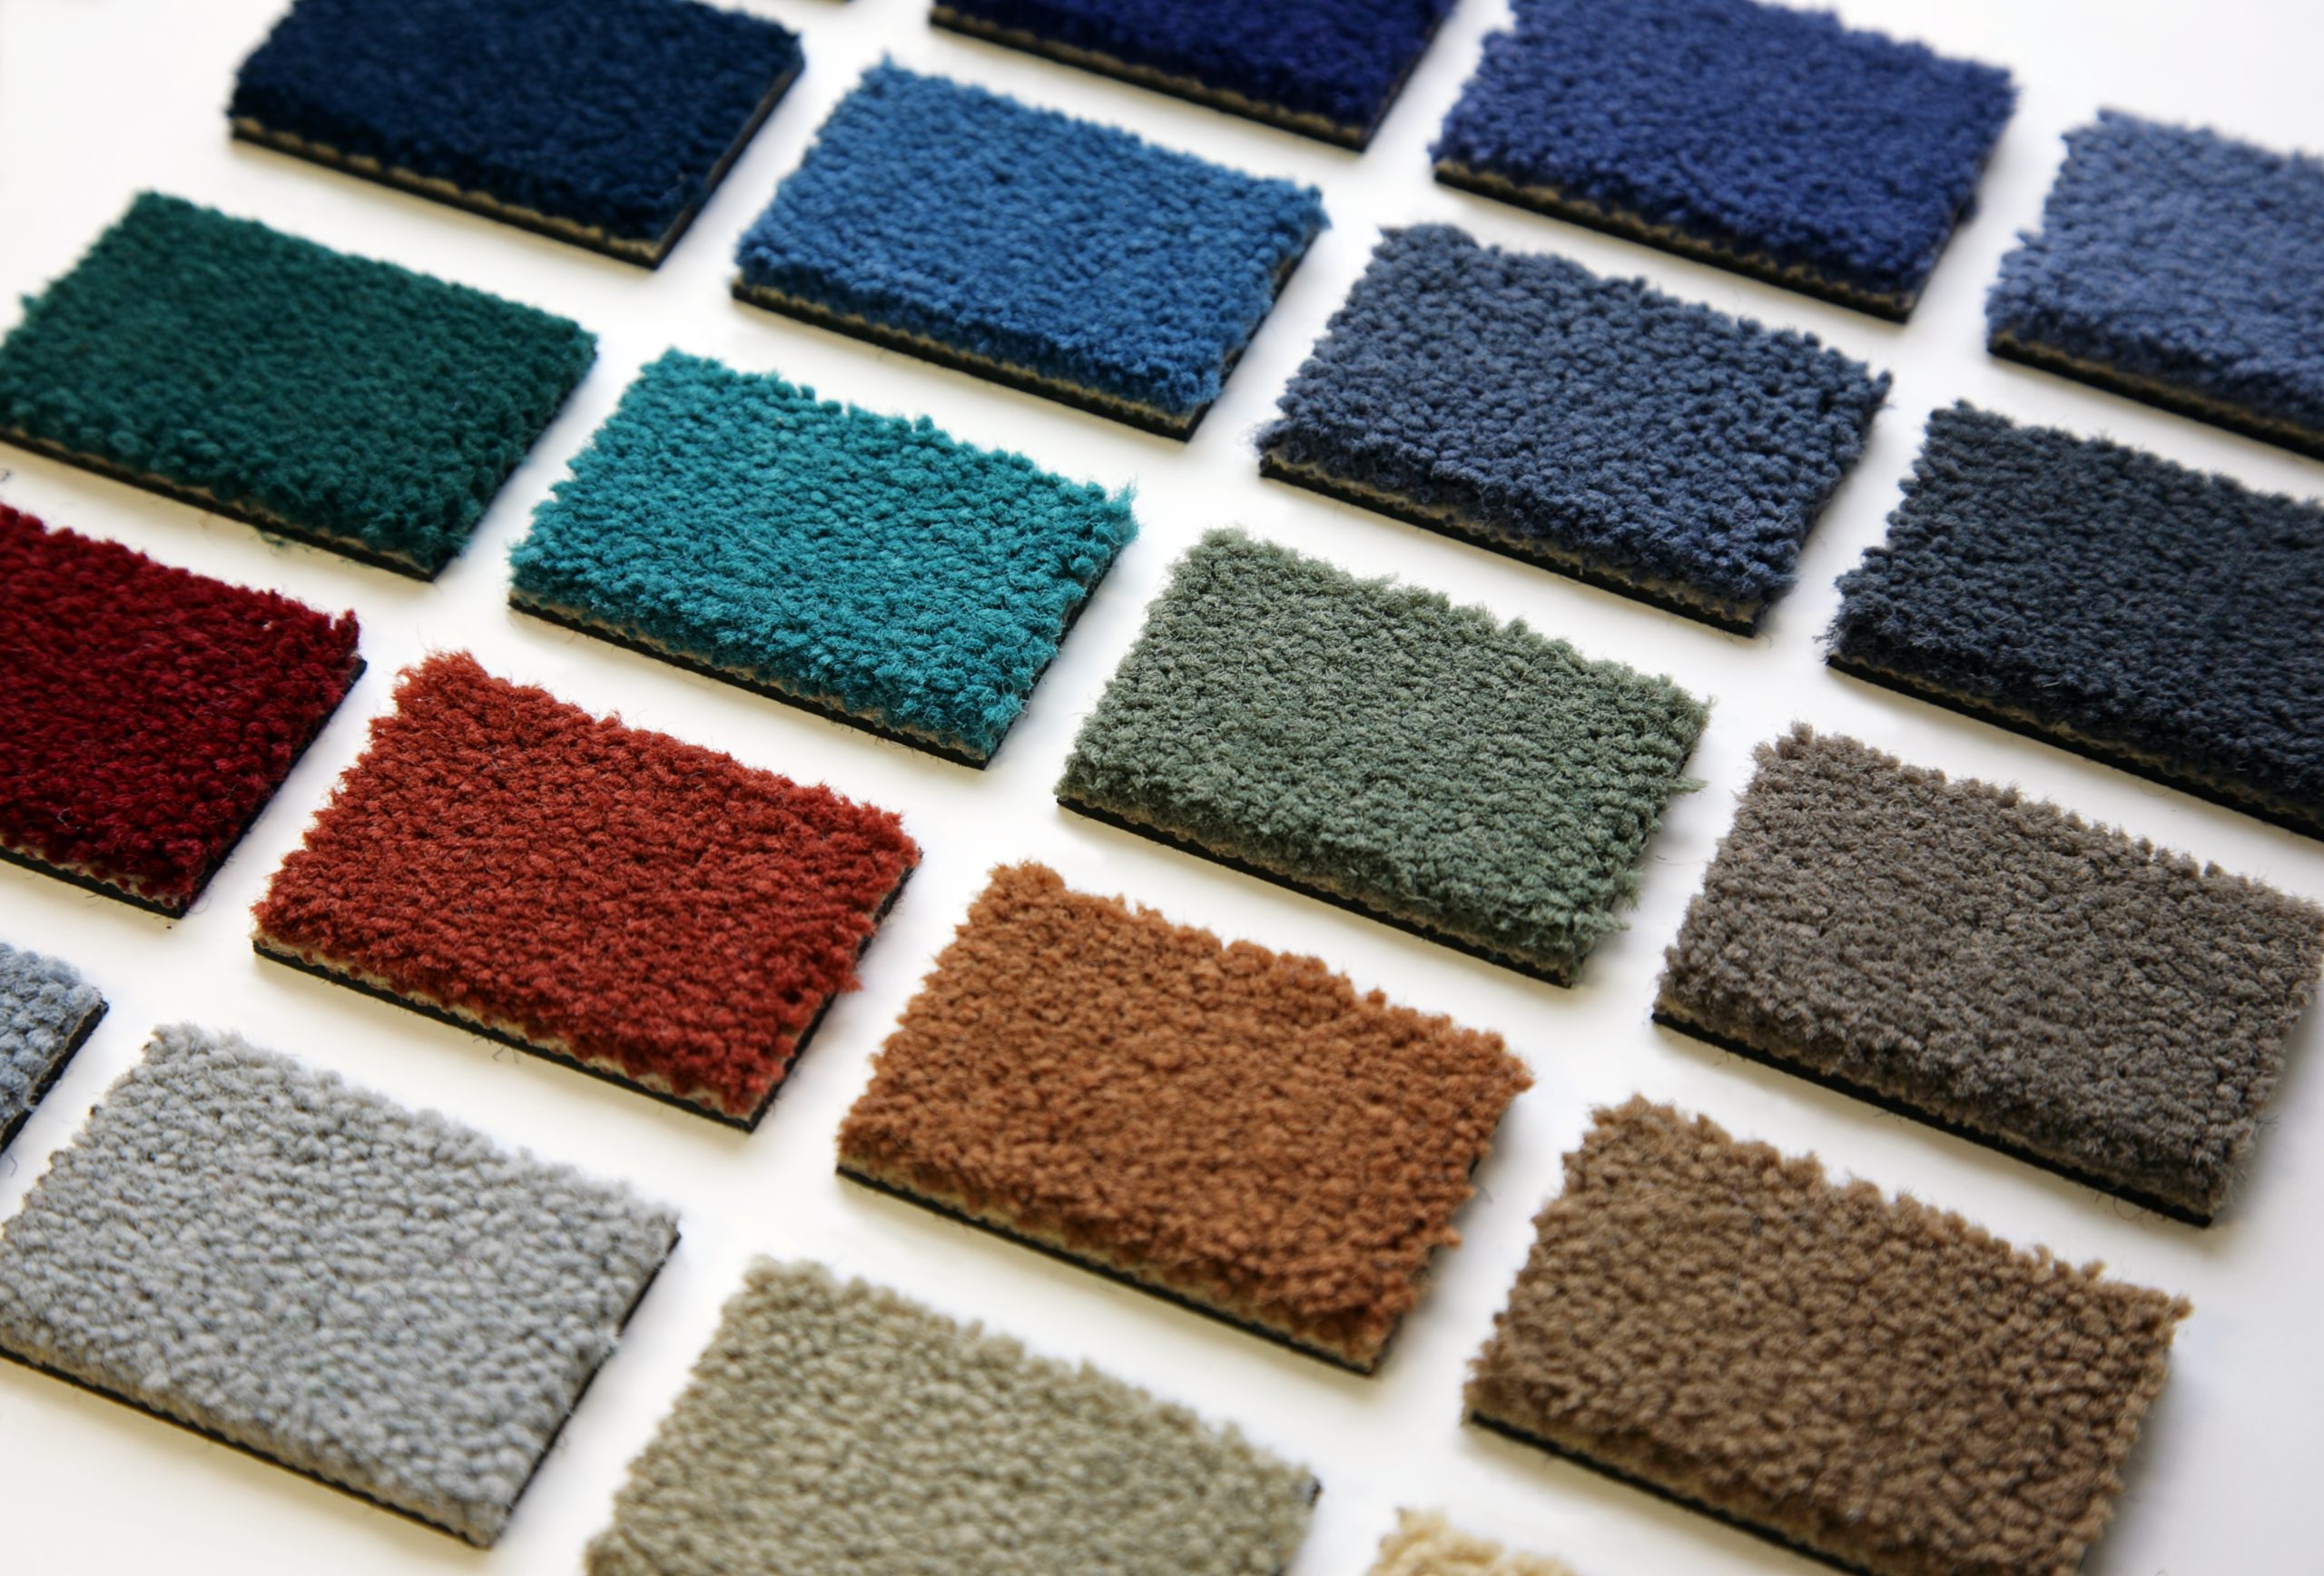 Should we be using wool carpets in schools?